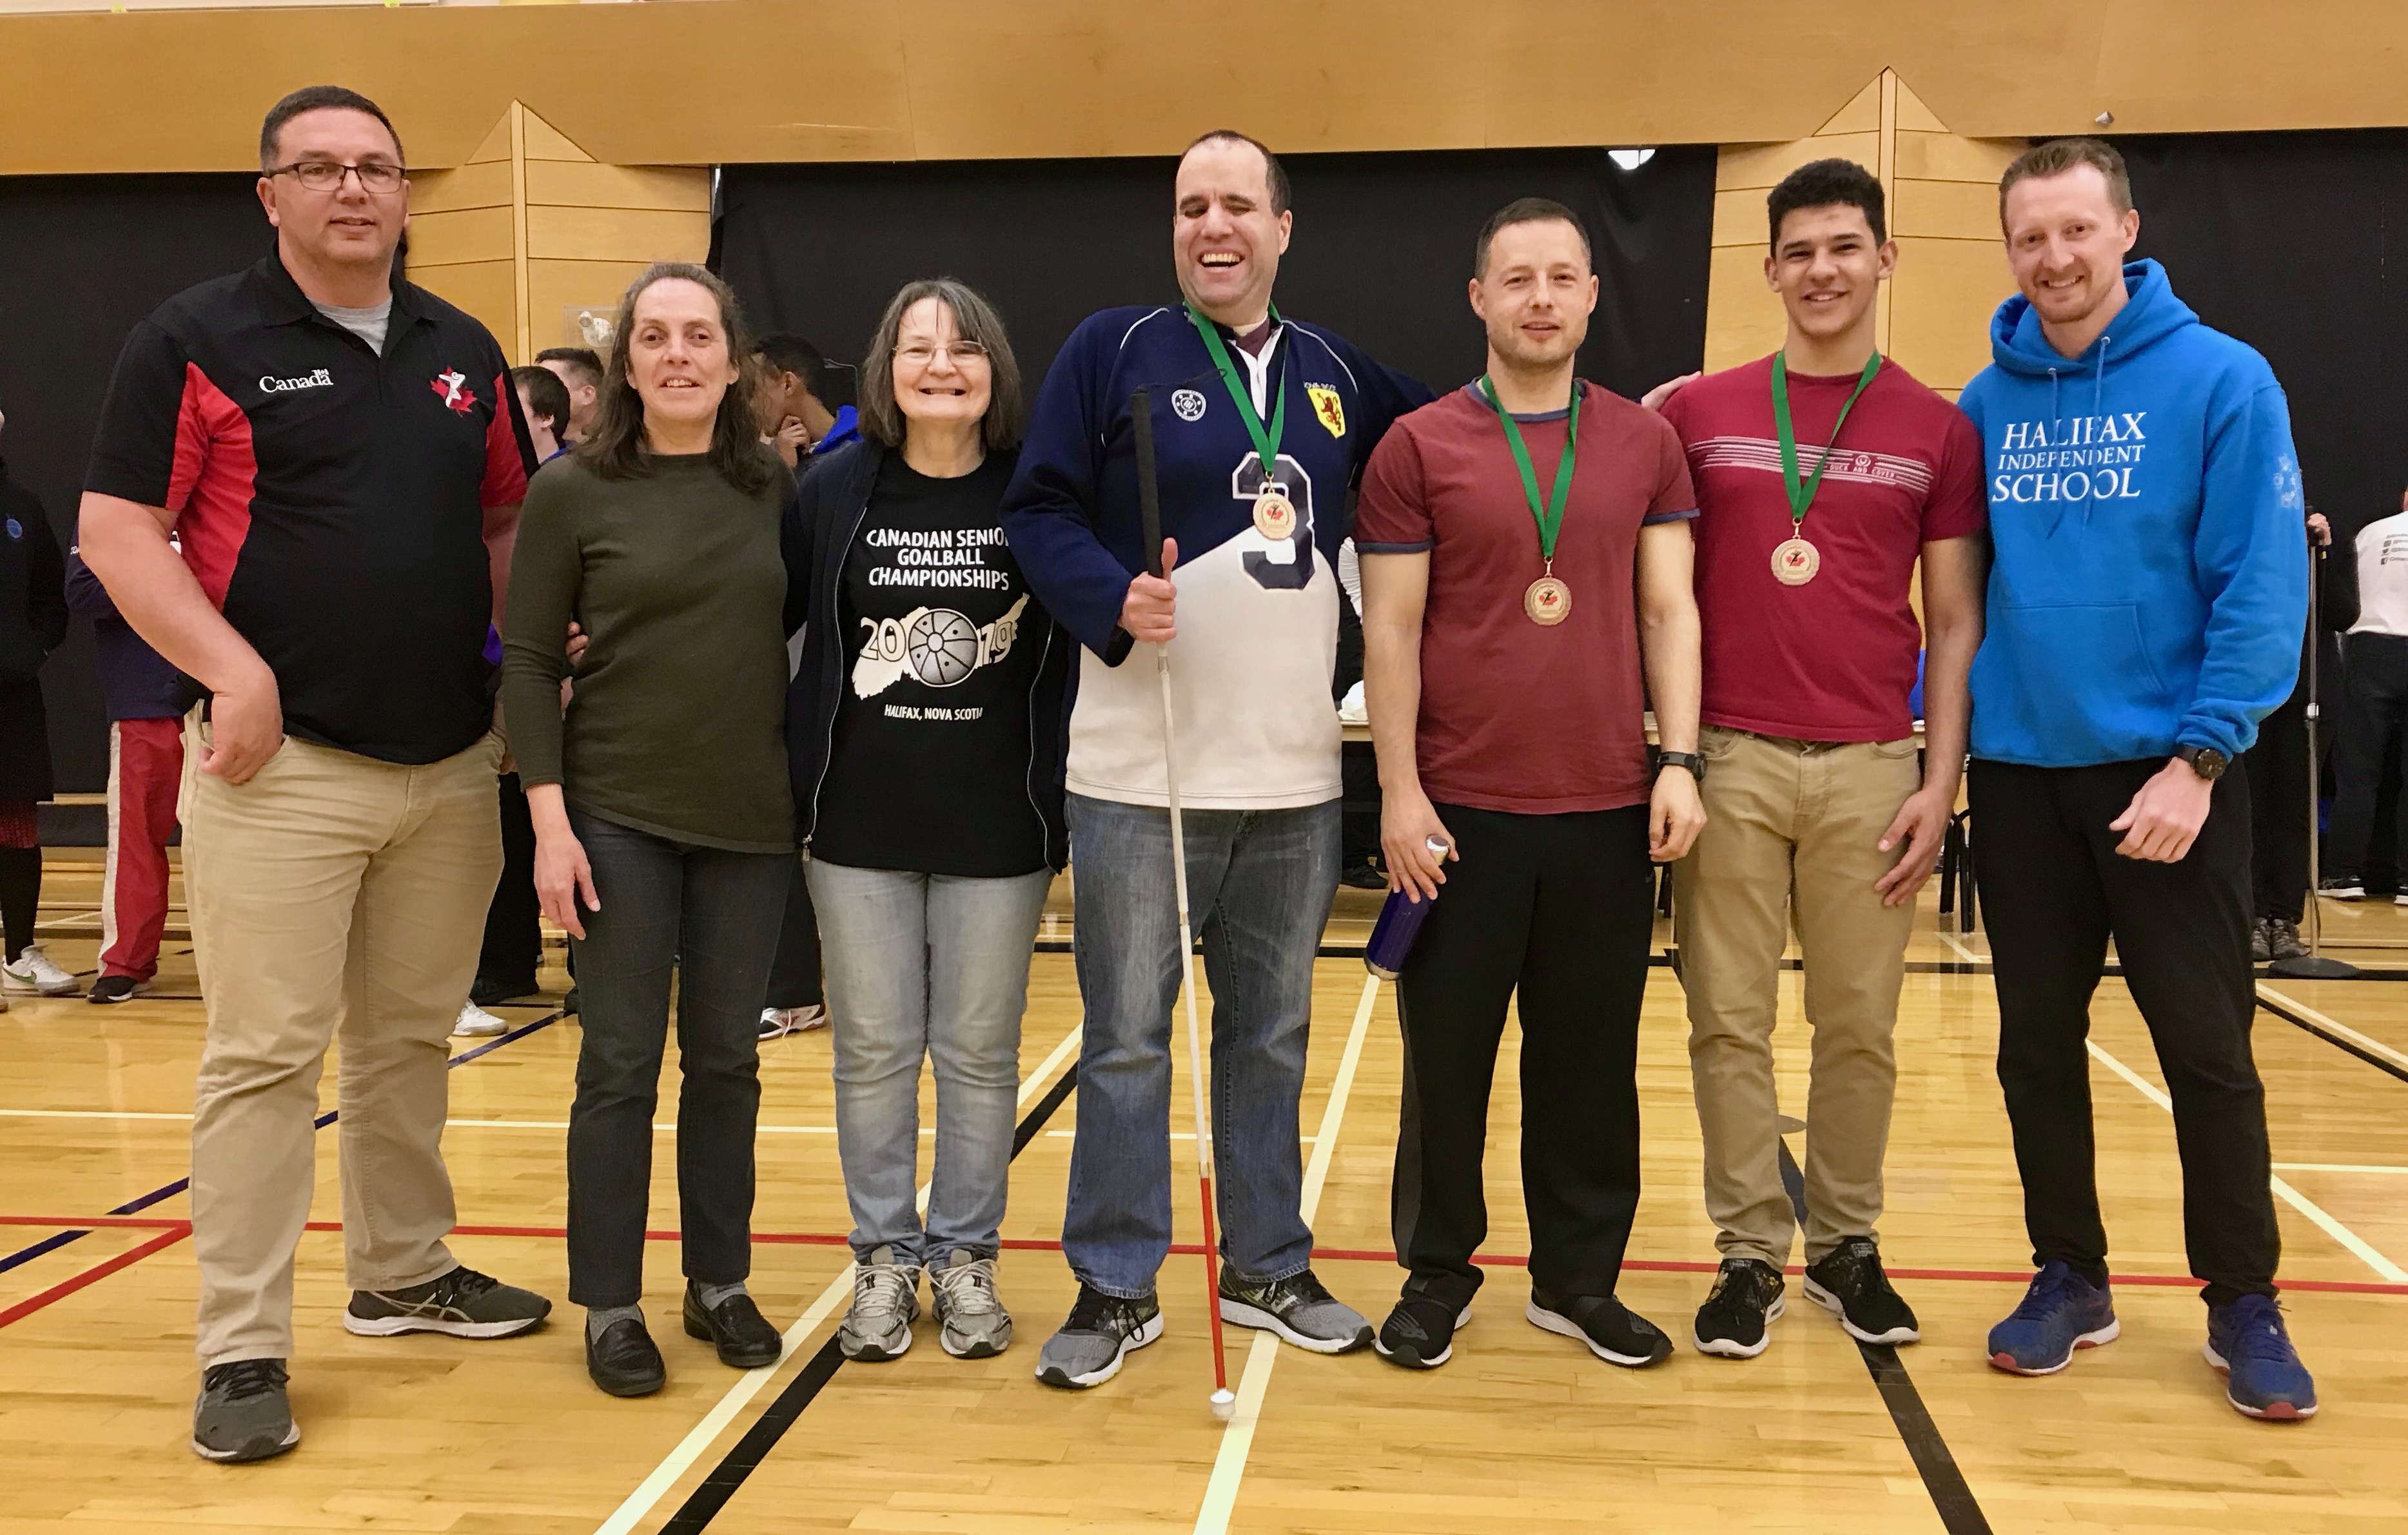 Nova Scotia 1 with & coaches 2019 bronze medal winners